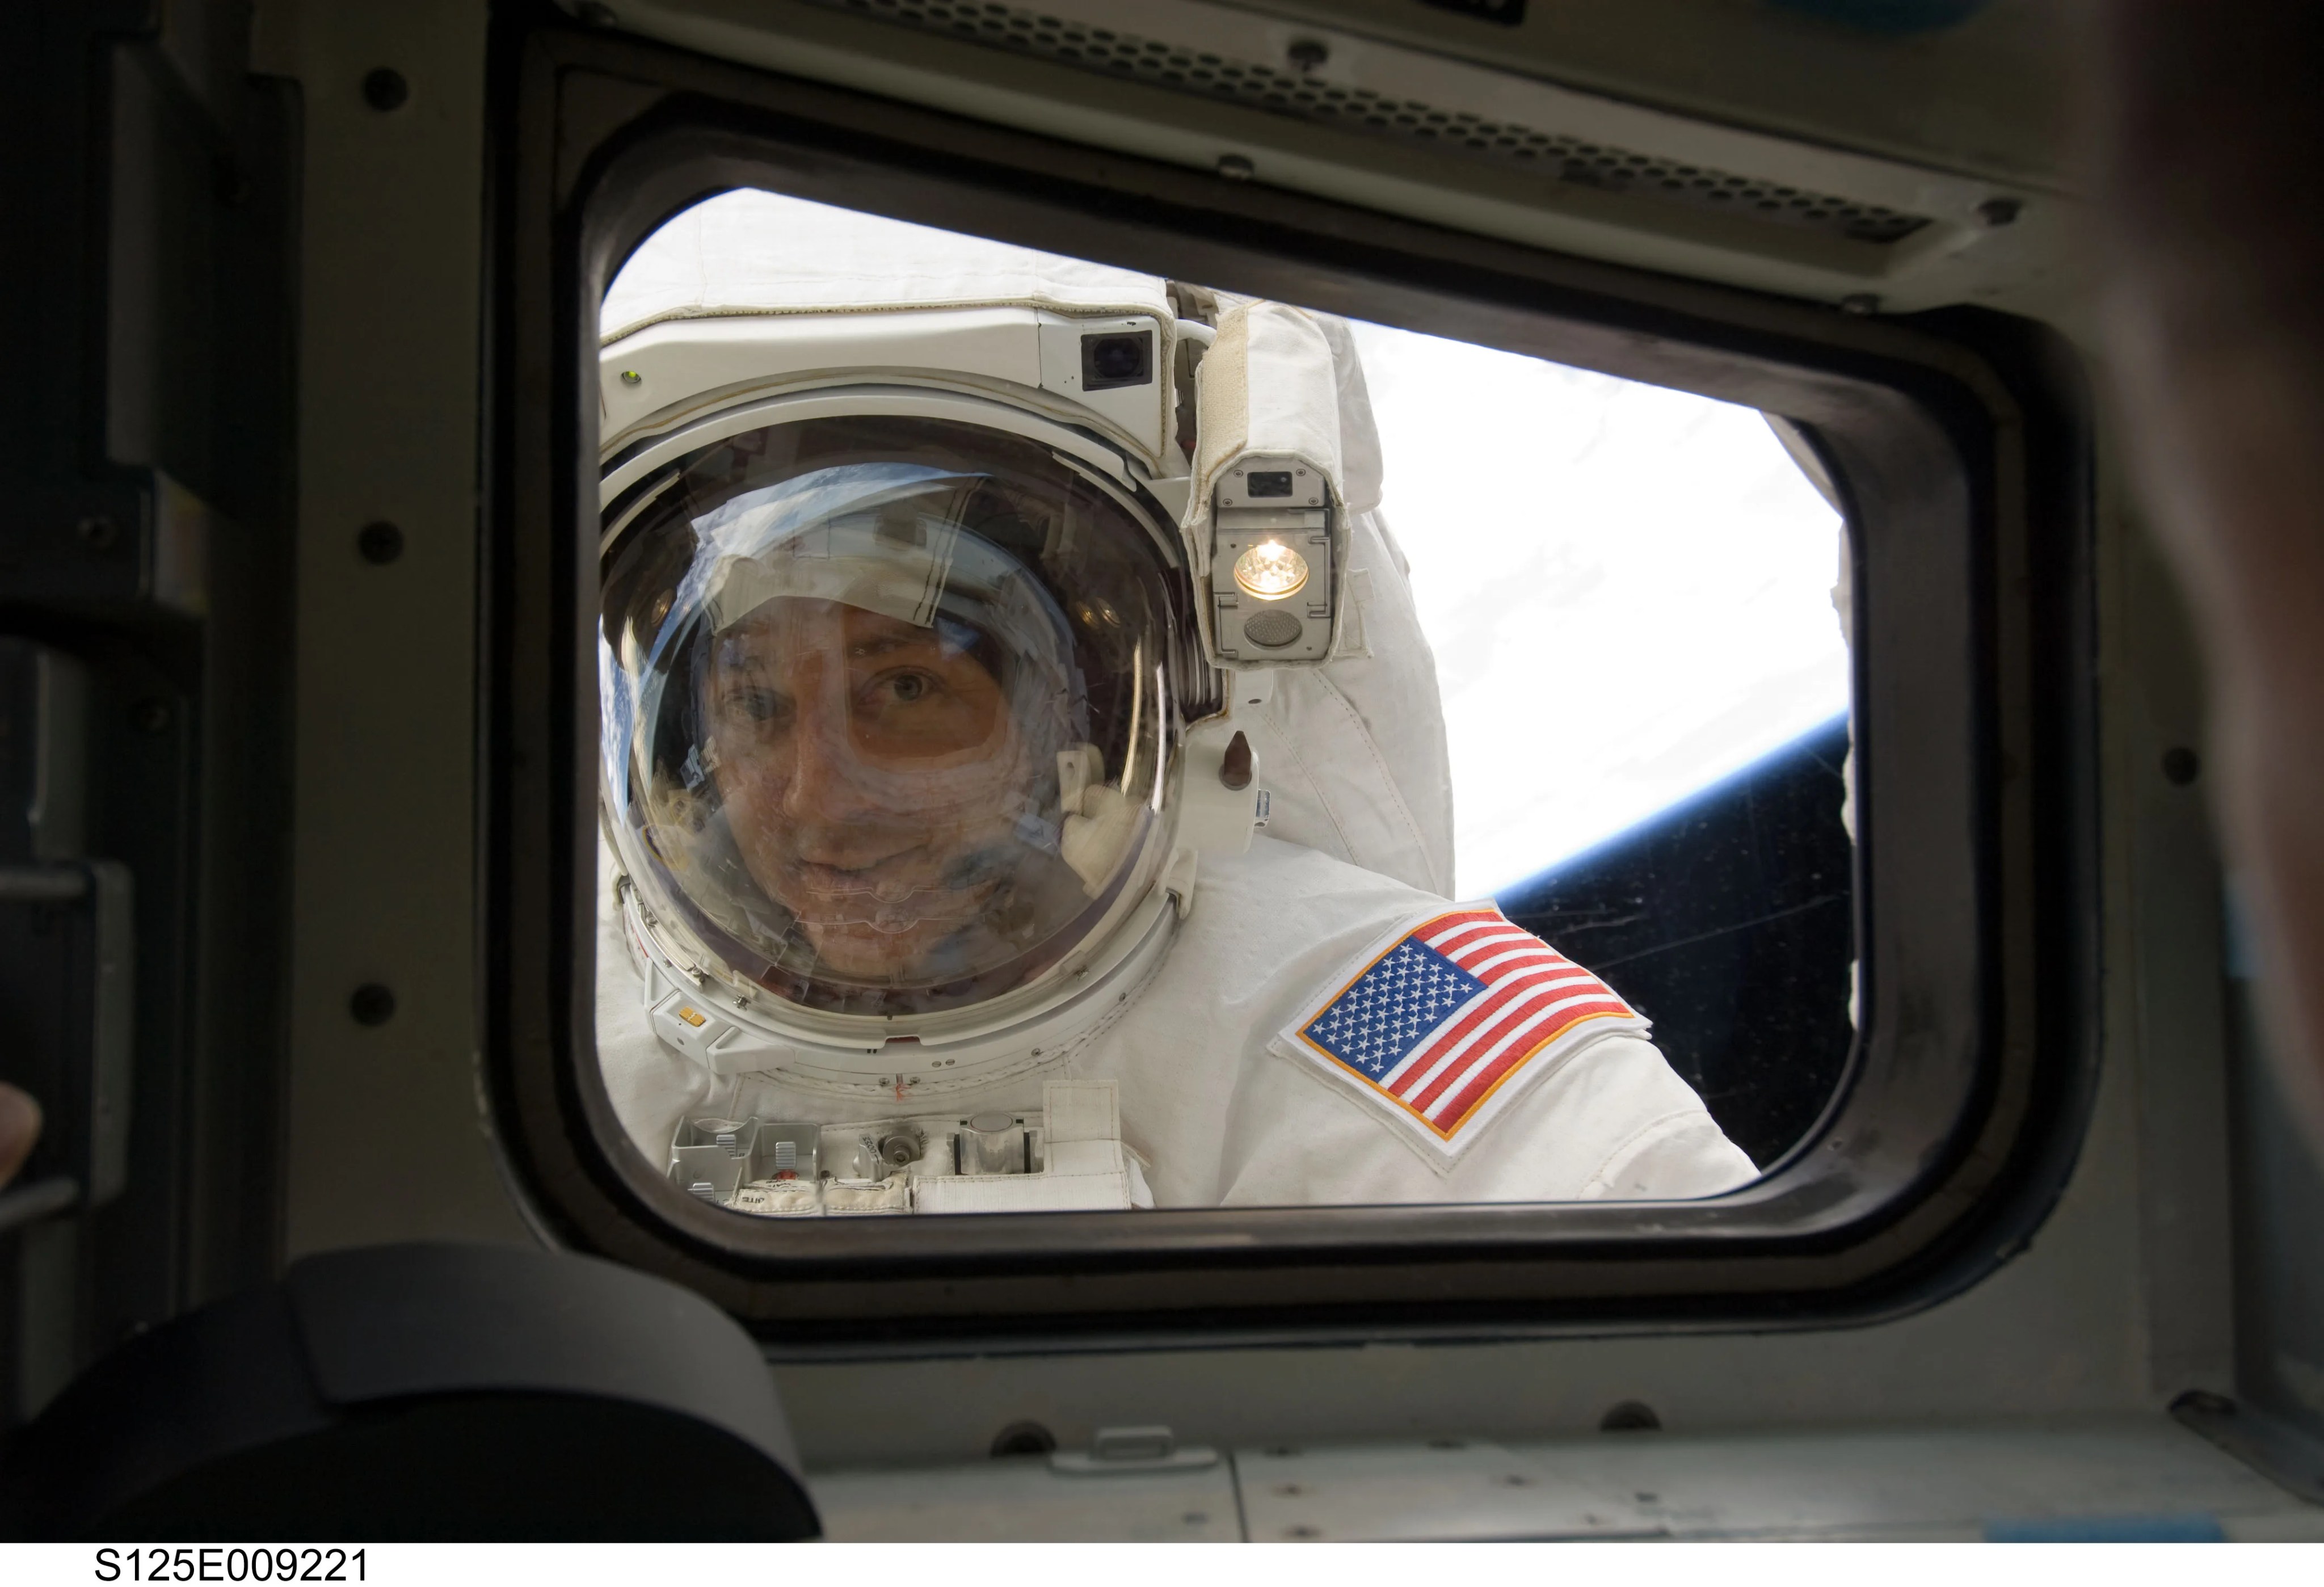 Astronaut Michael Massimino